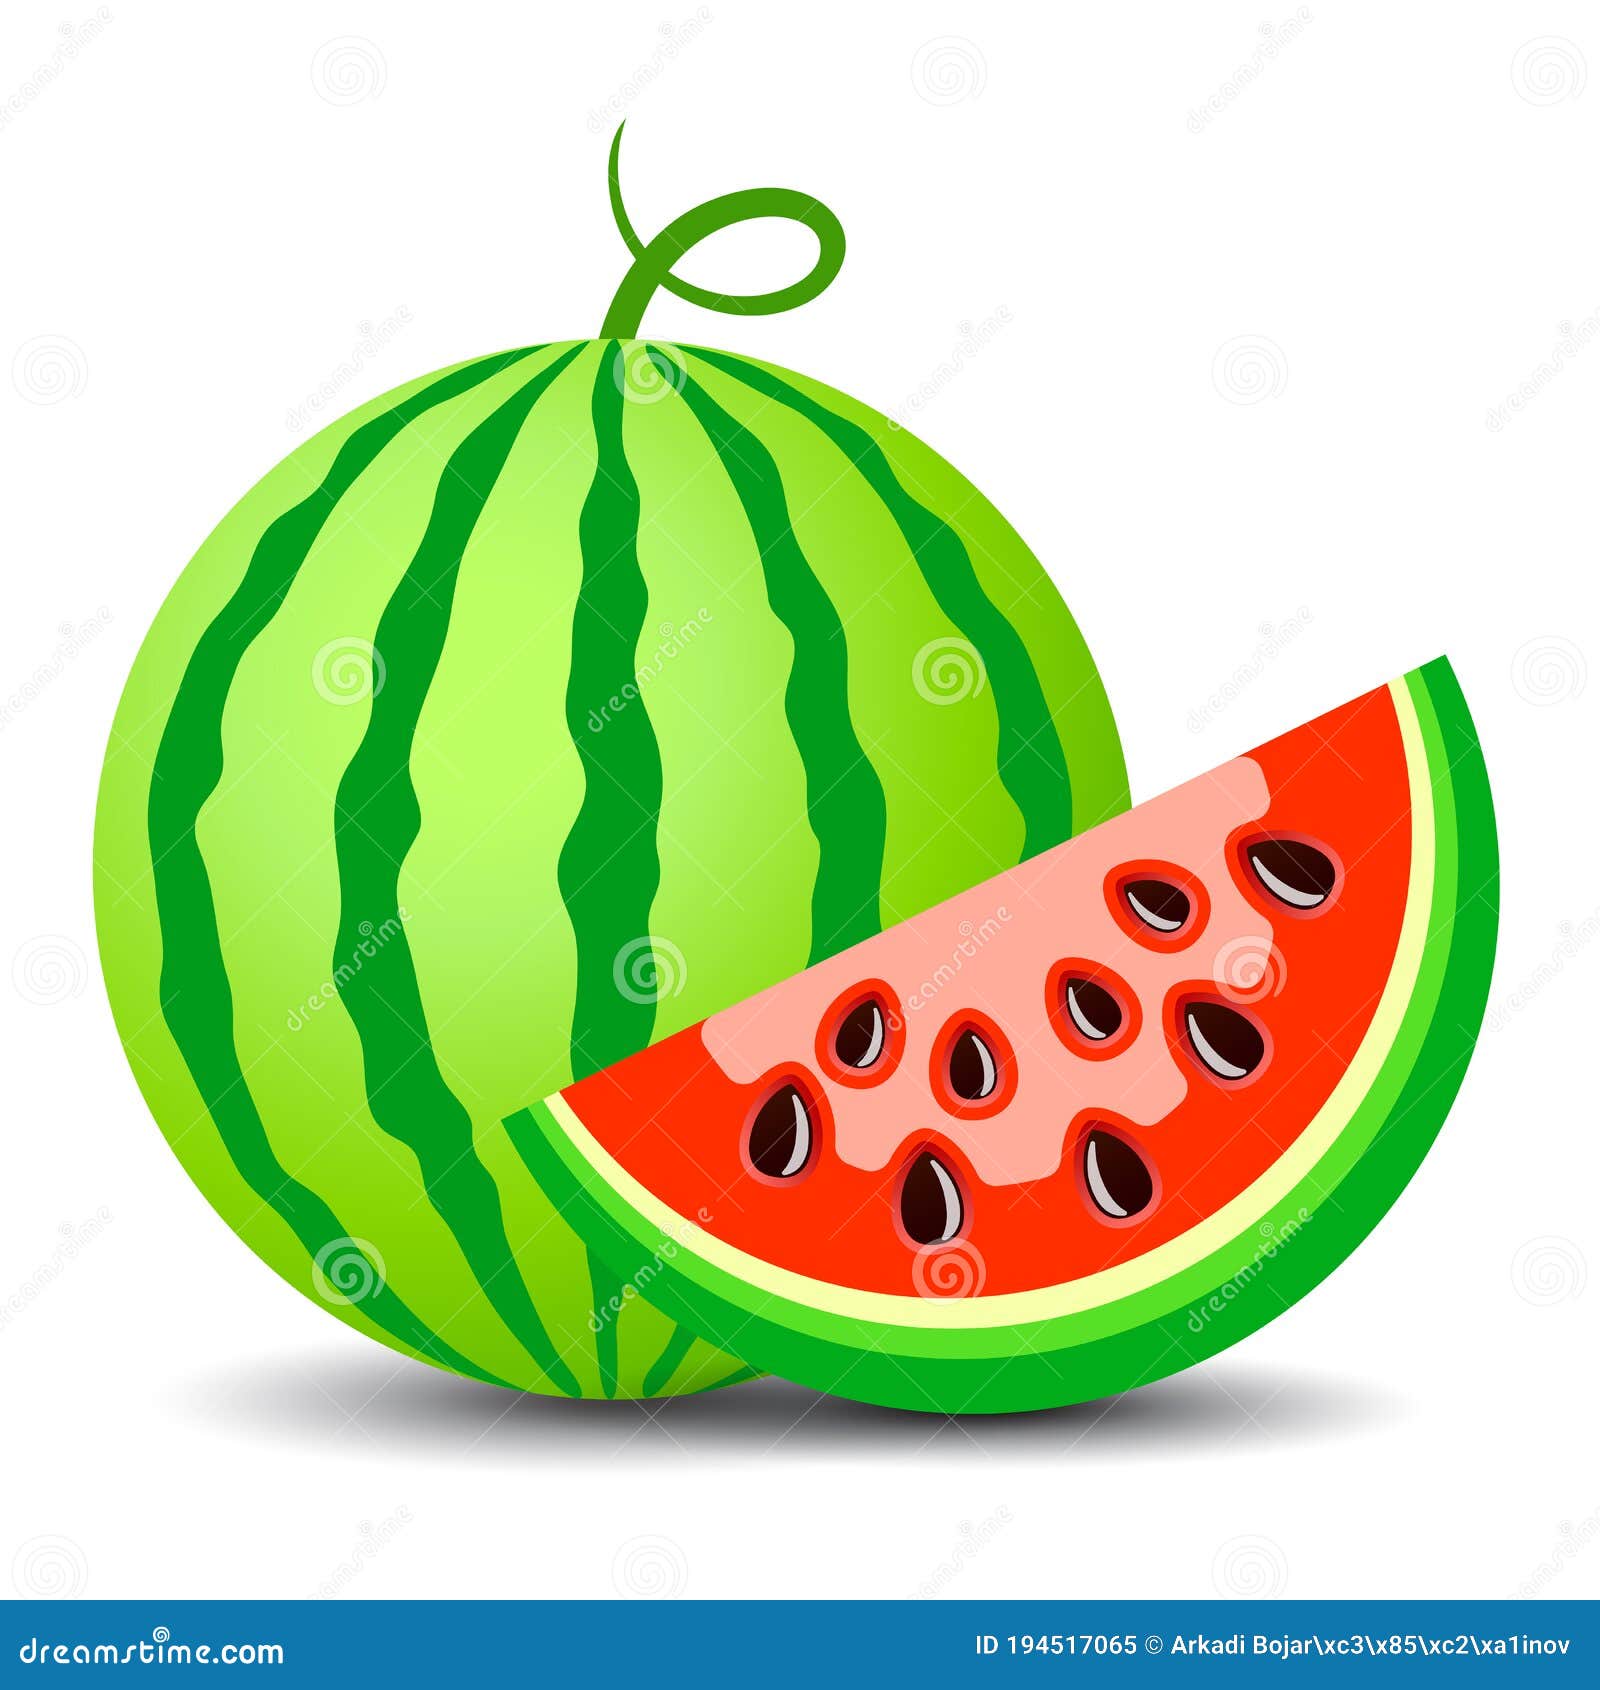 Watermelon Vector Icon Cartoon Stock Vector - Illustration of food,  healthy: 194517065